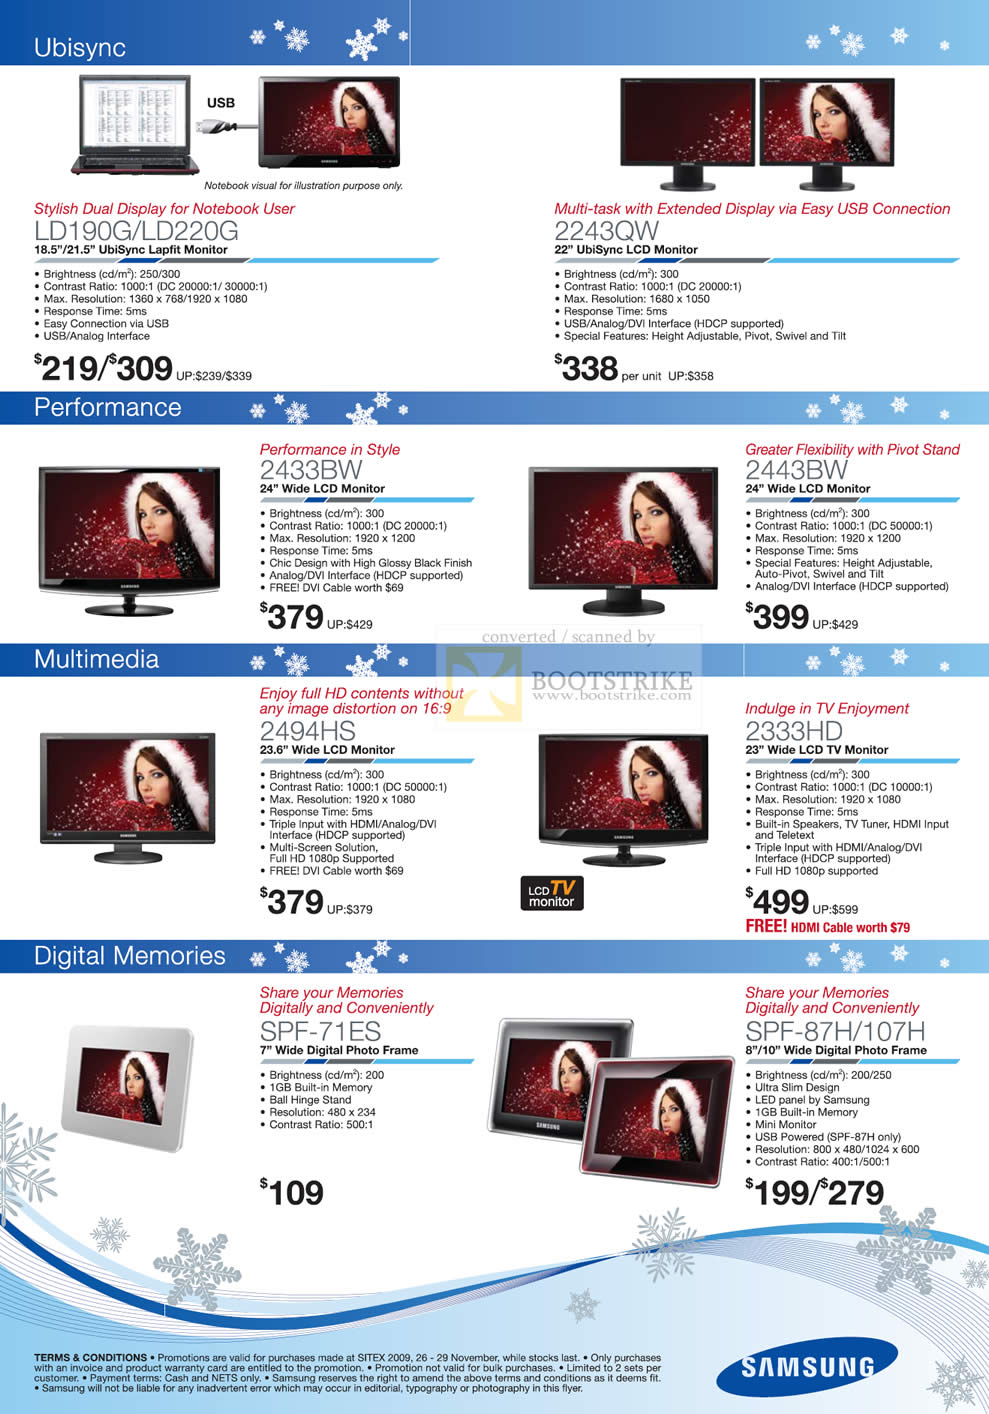 Sitex 2009 price list image brochure of Samsung LCD Monitors Digital Photo Frame SPF